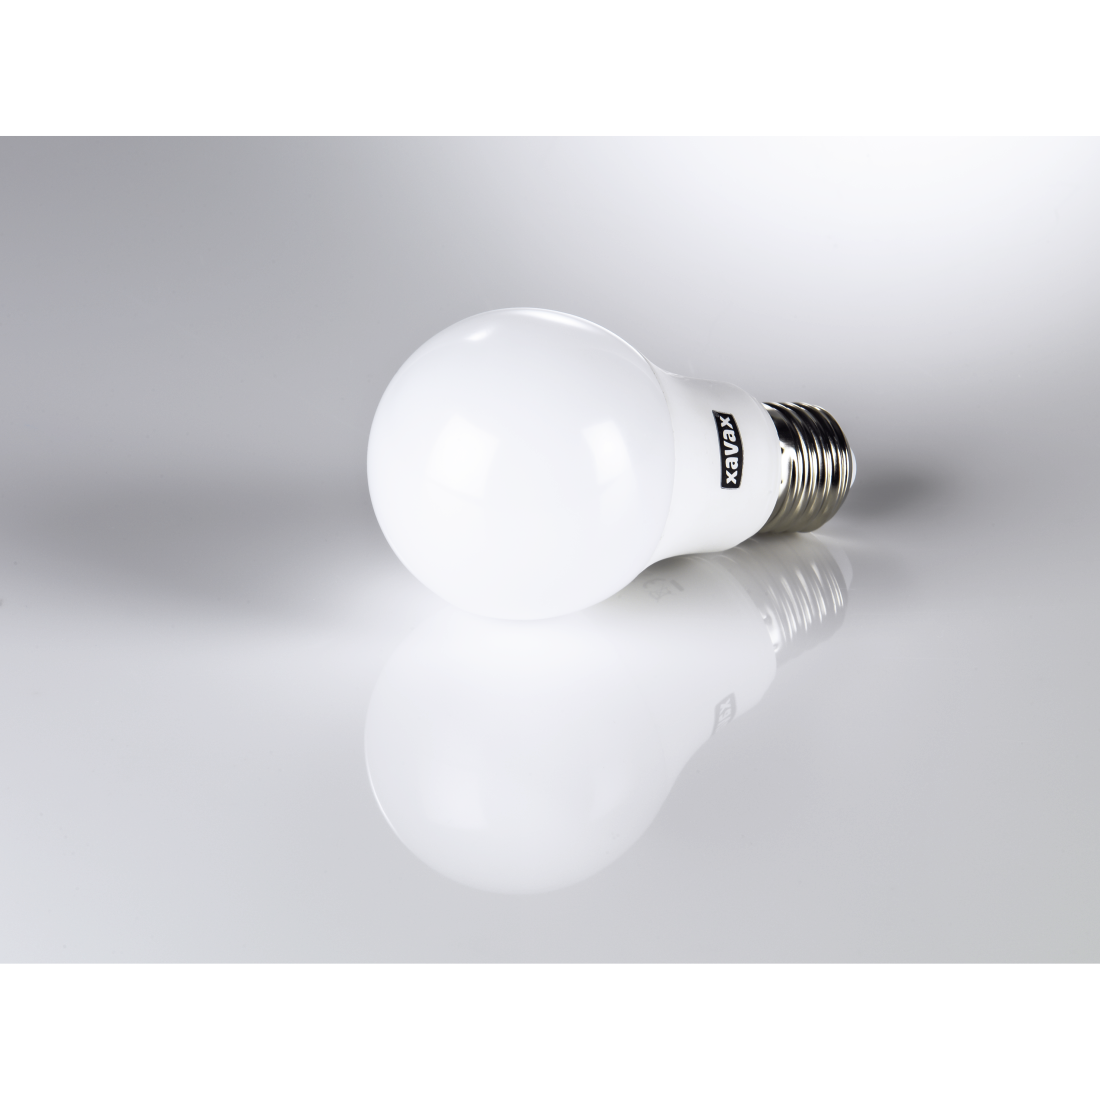 abx3 Druckfähige Abbildung 3 - Xavax, LED-Lampe, E27, 806lm ersetzt 60W, Glühlampe, Warmweiß, dimmbar